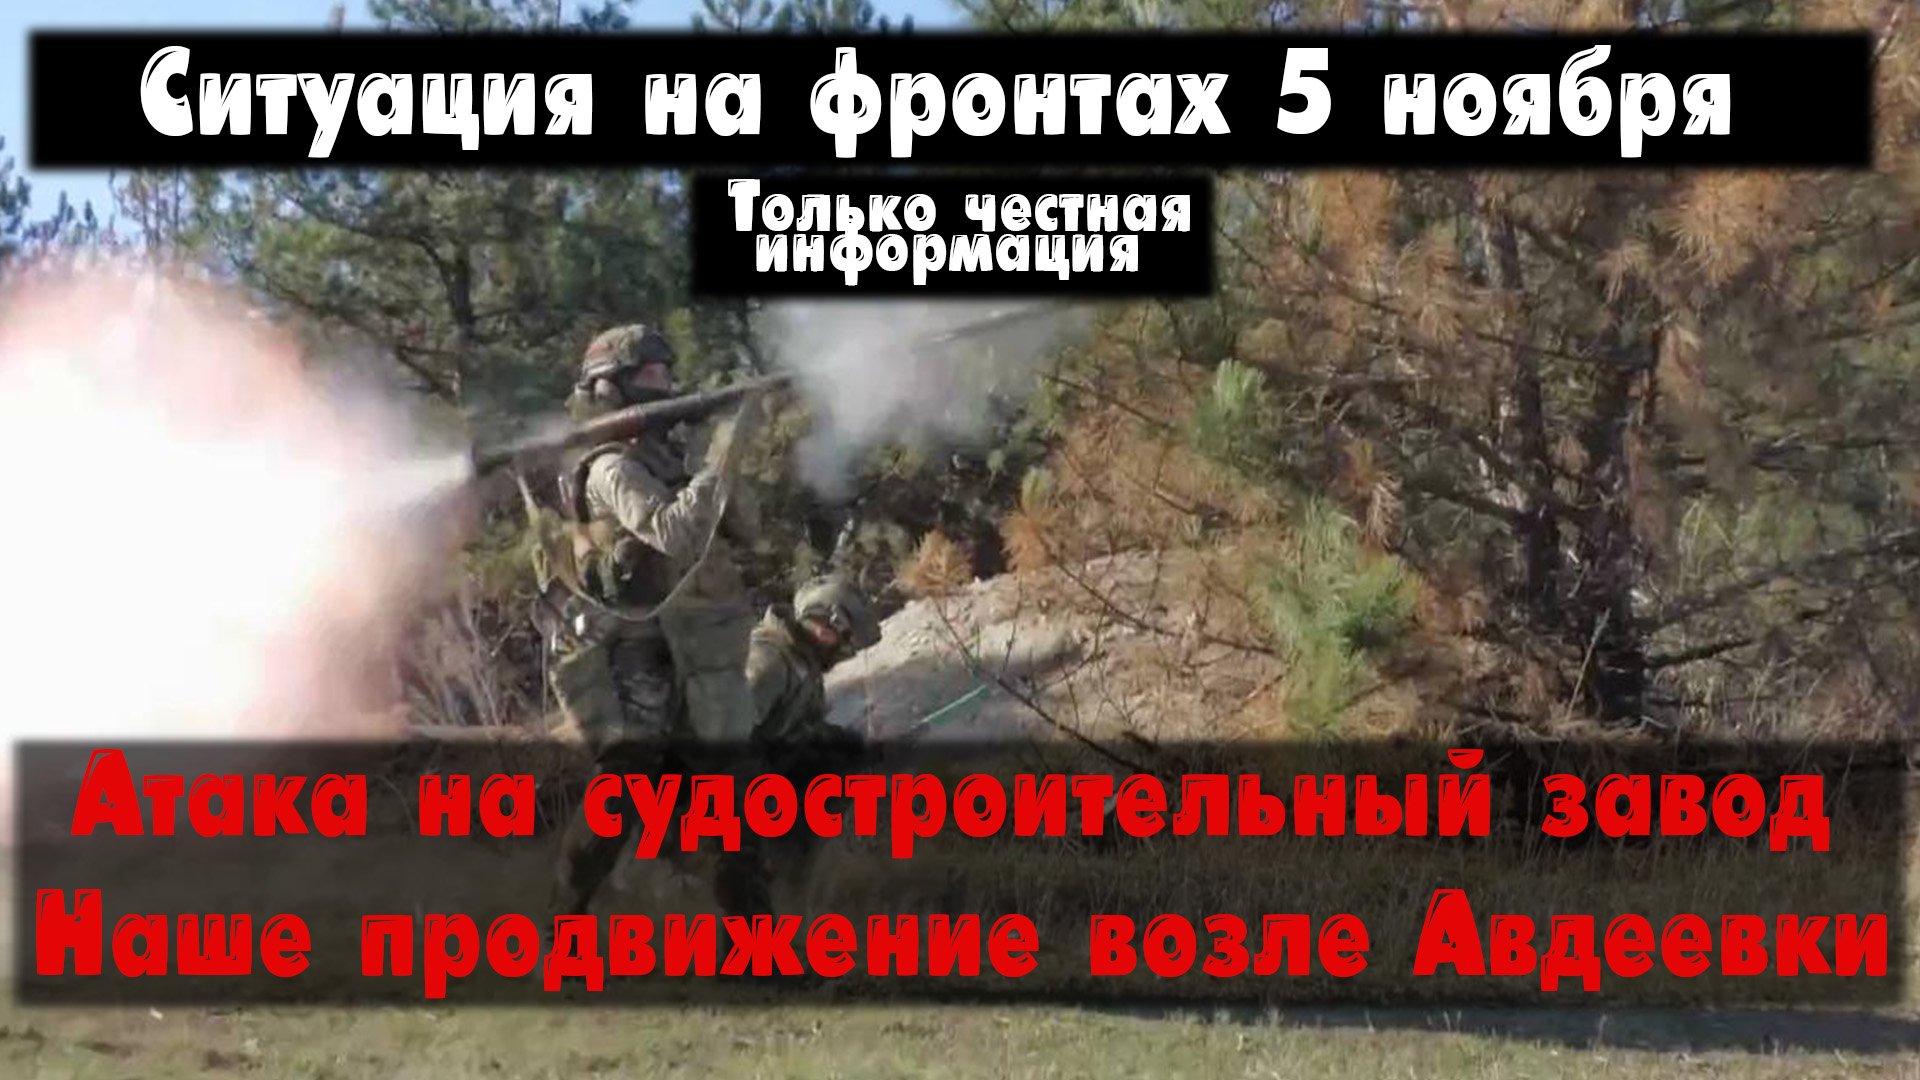 Видео из телеграмм война на украине фото 26